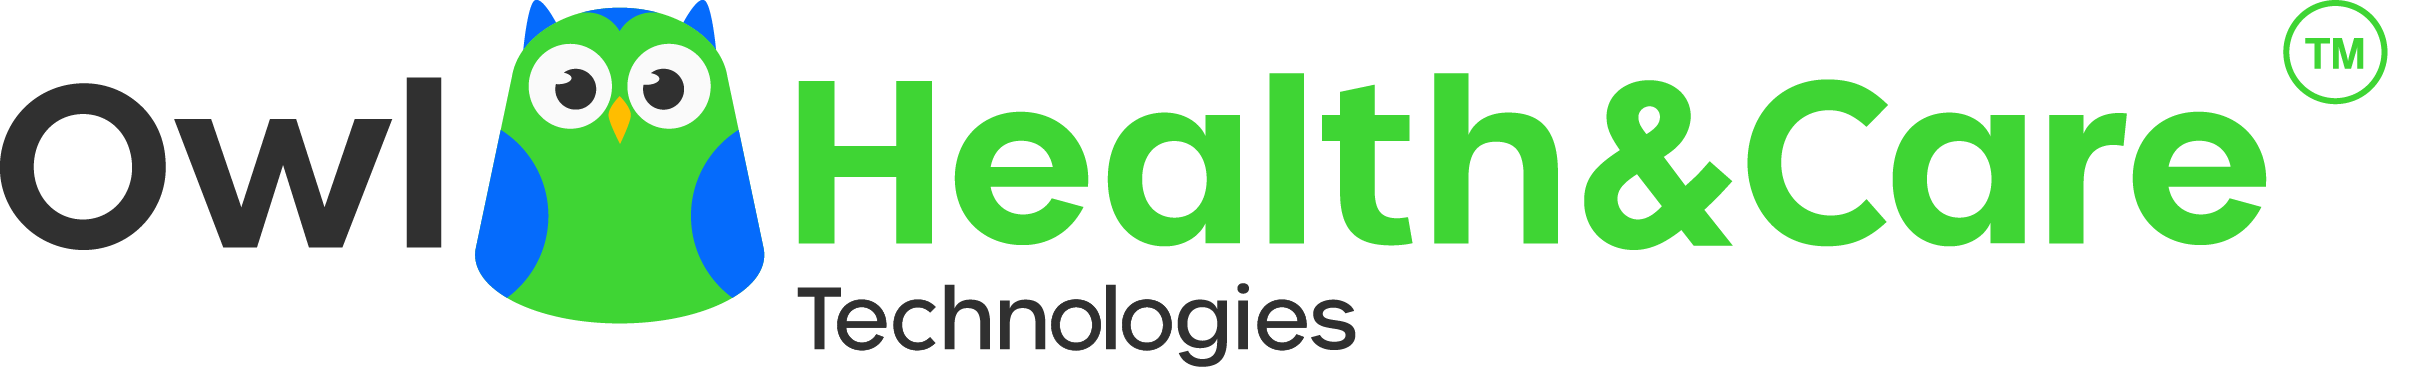 Owlhealth&Care Technologies